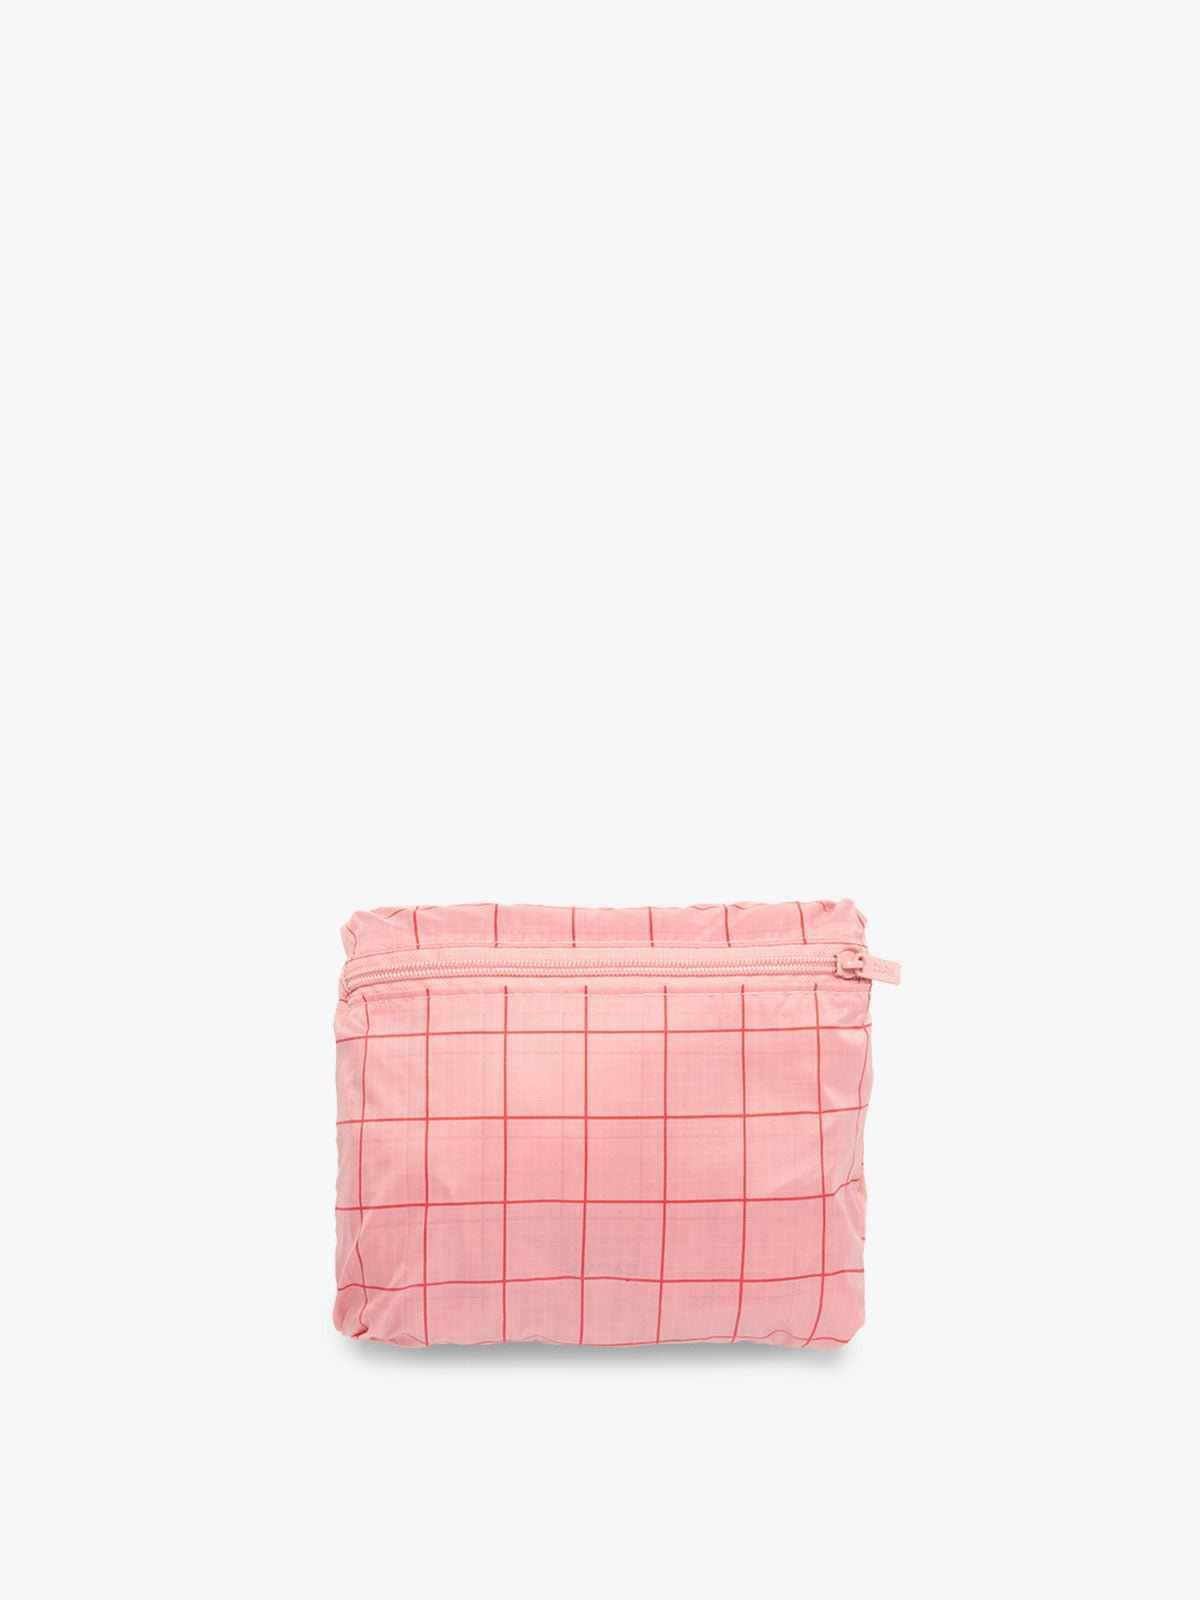 CALPAK Compakt foldable duffle bag for travel in pink grid